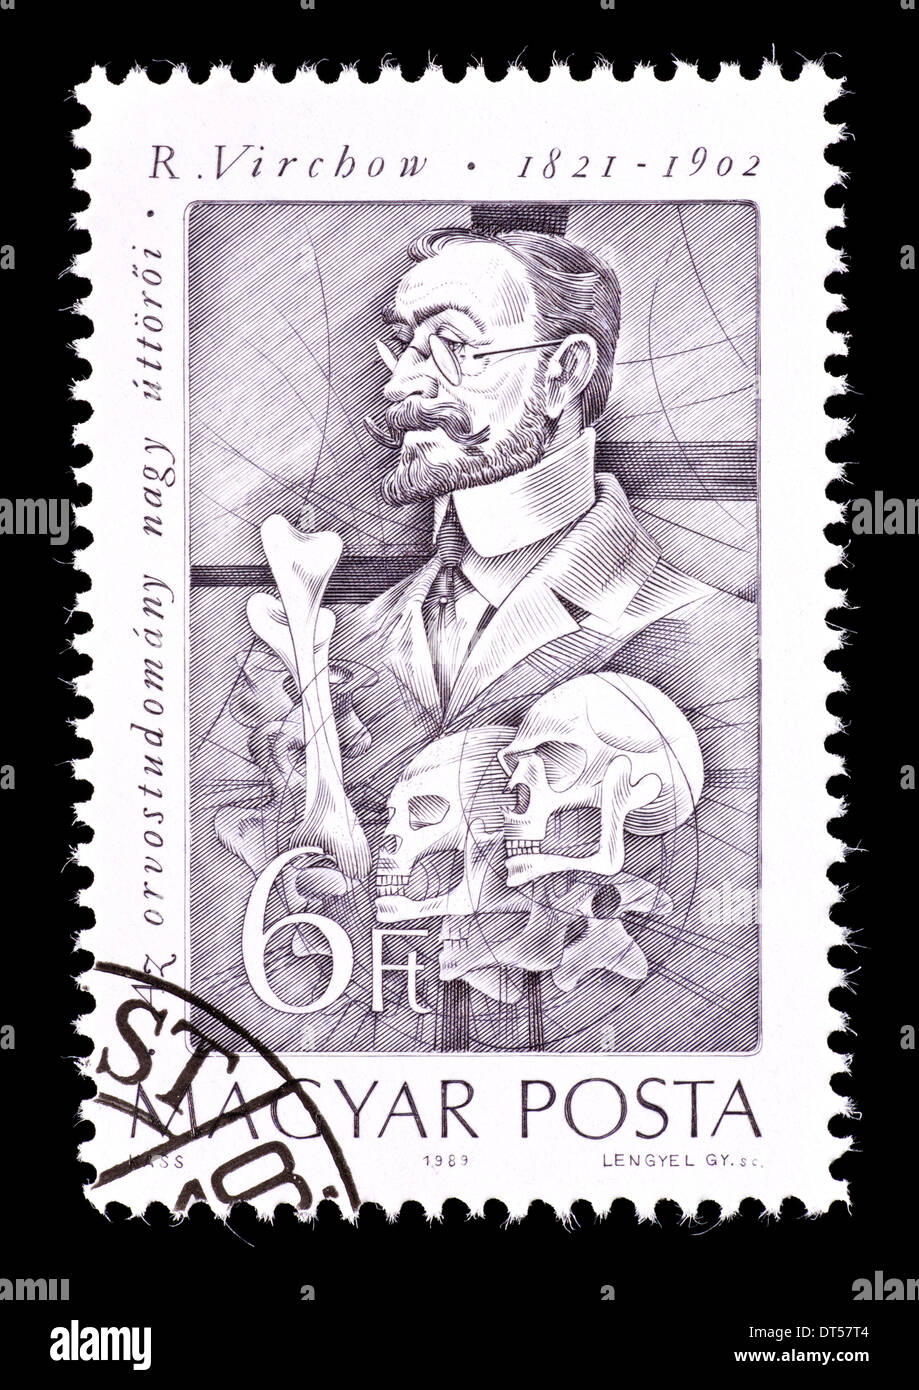 Francobollo da Ungheria raffiguranti Rudolf Virchow, patologo tedesco. Foto Stock